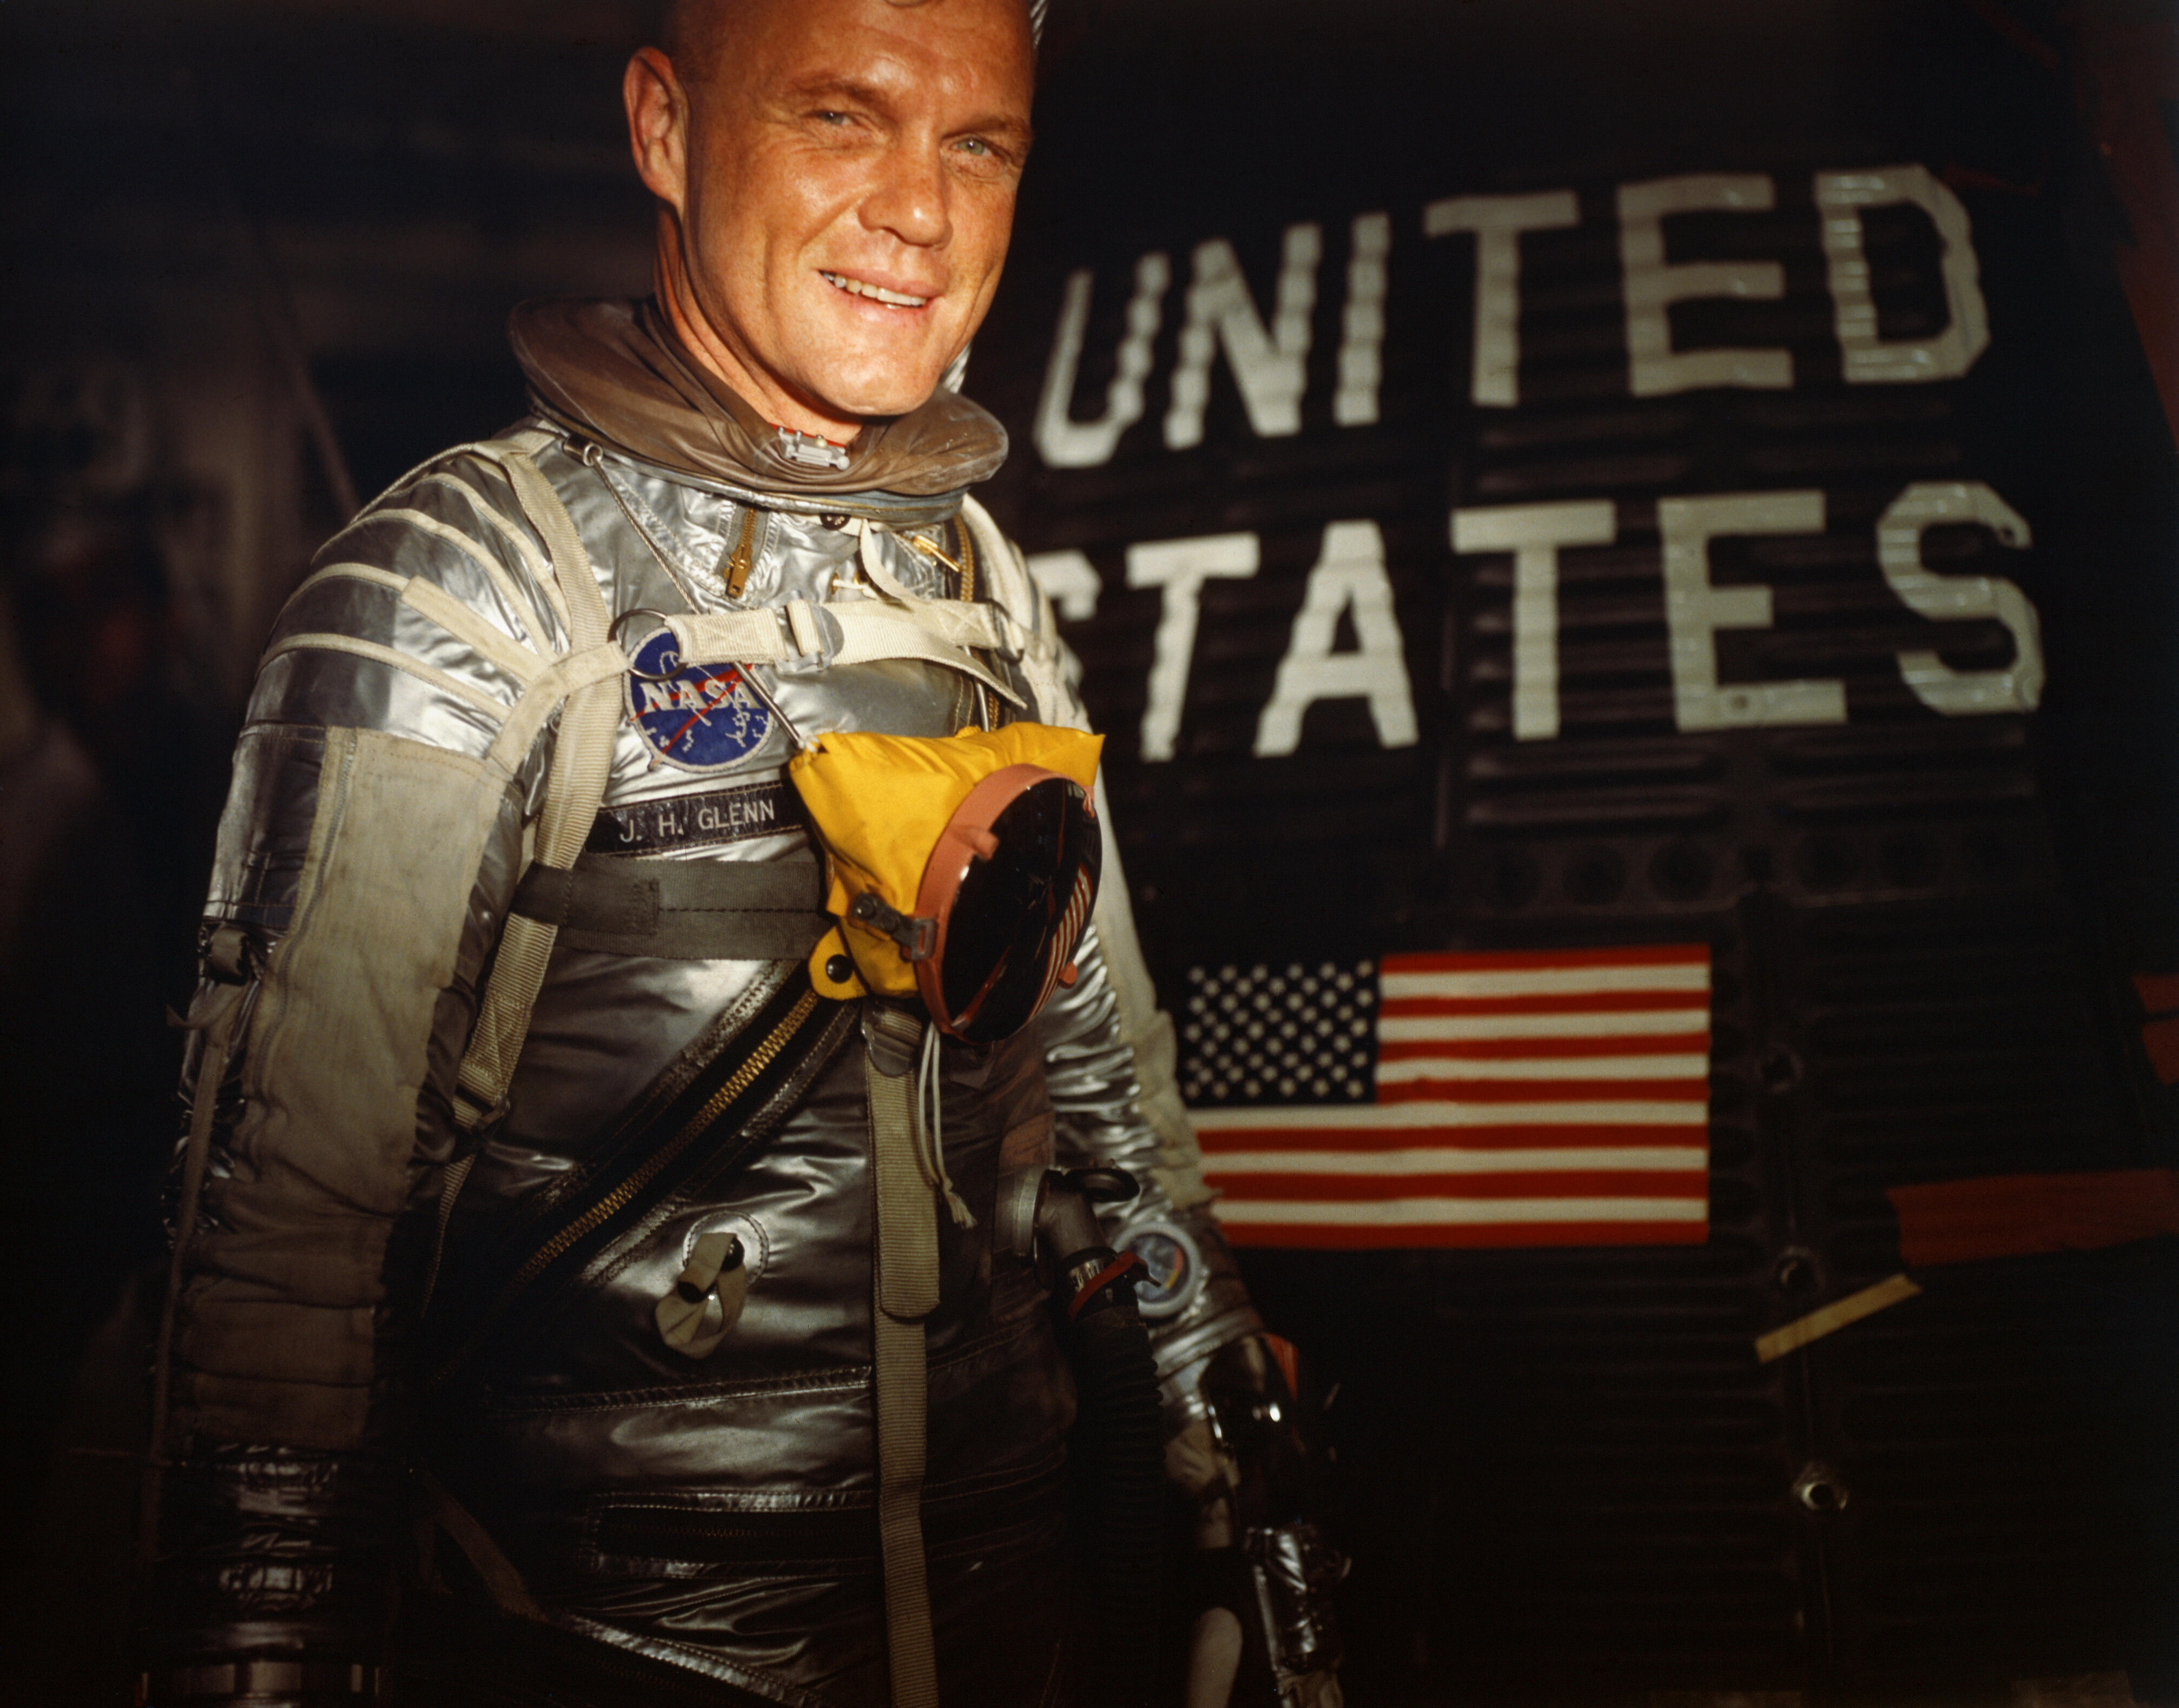 (Original Caption) Cape Canaveral, Fla.: Lt. Col. John H. Glenn, Jr. enters his Mercury 7 for a test.